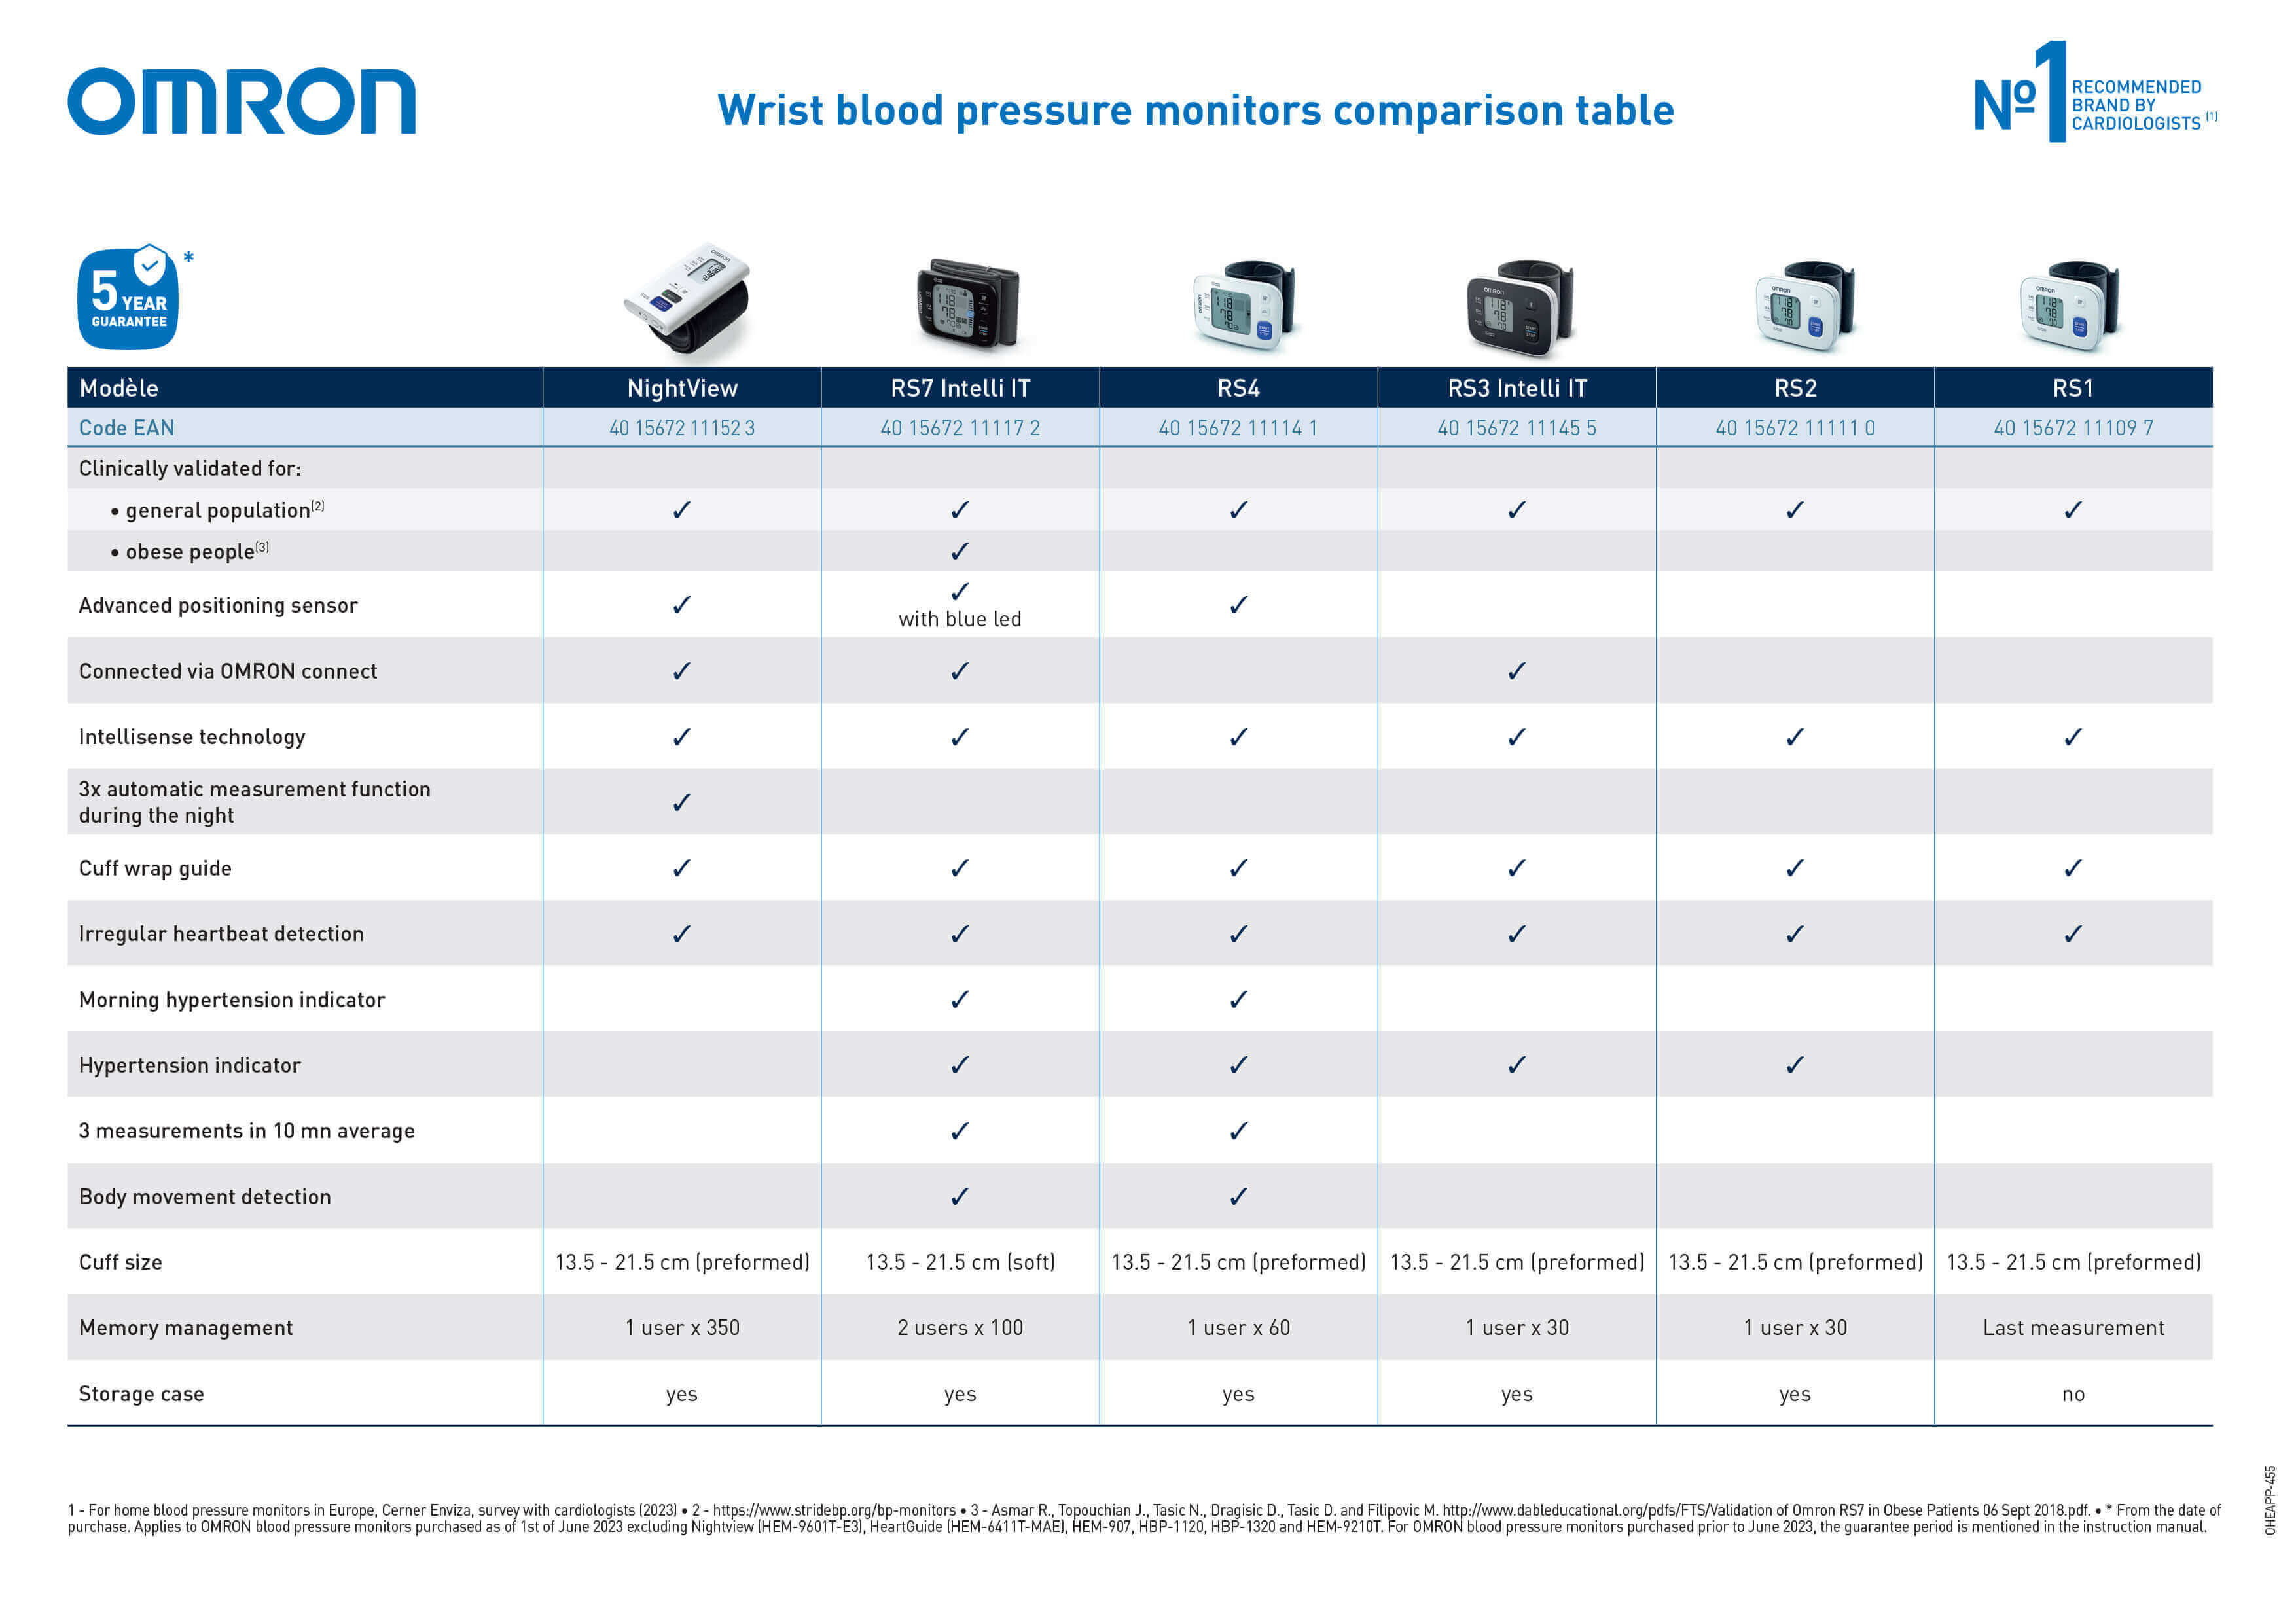 OMRON_Wrist_BPM_Comparison_table.jpg